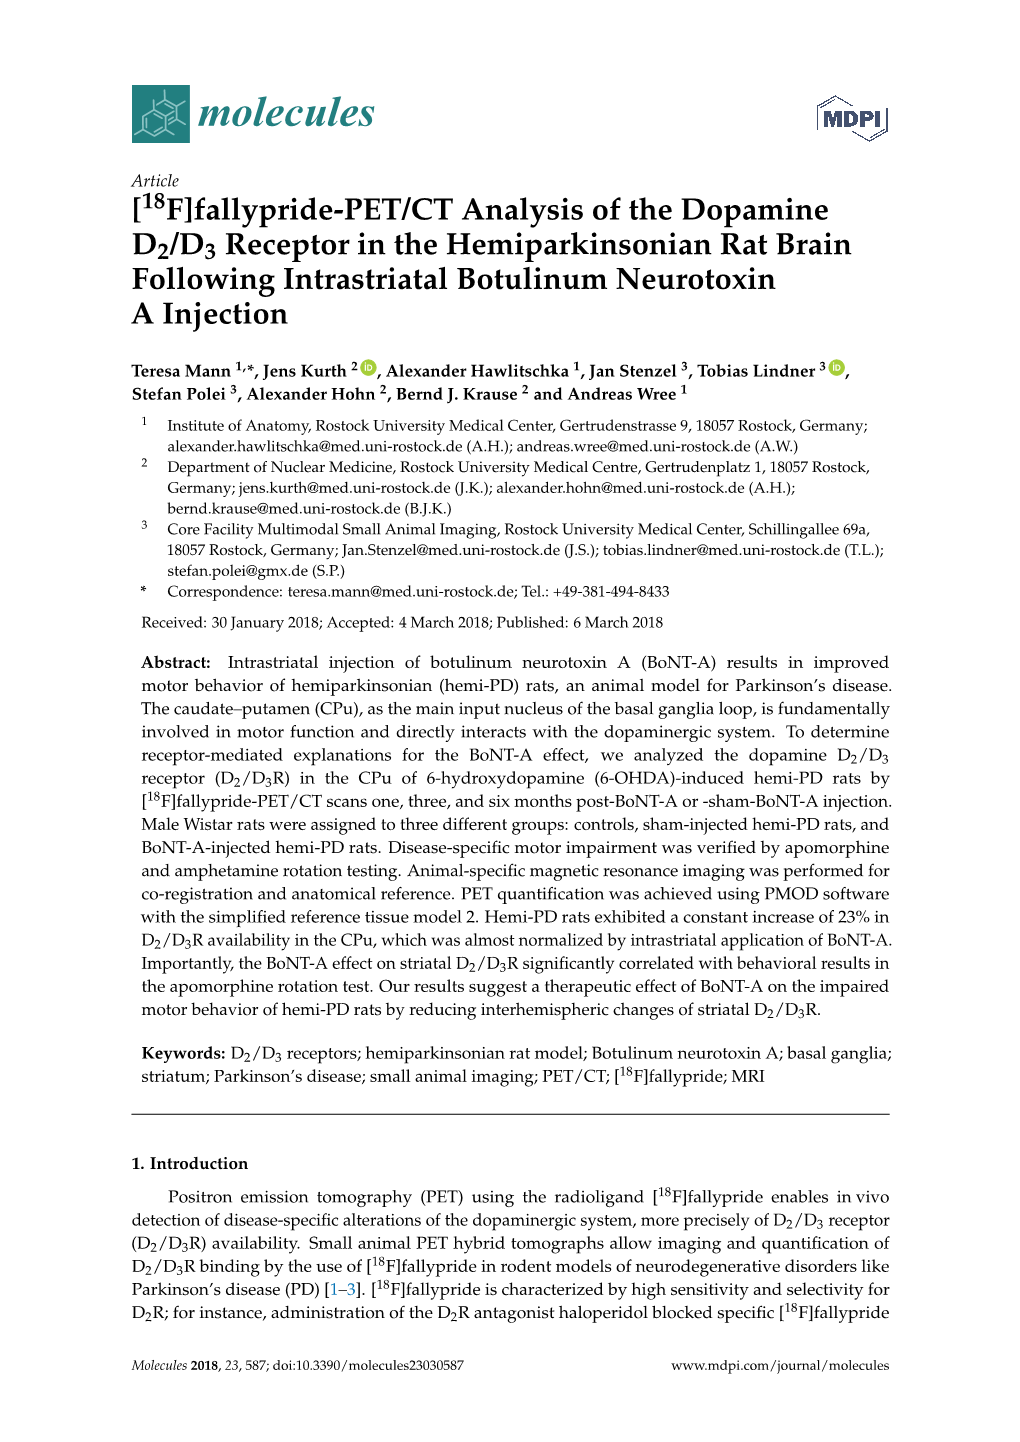 [18F]Fallypride-PET/CT Analysis of the Dopamine D2/D3 Receptor in the Hemiparkinsonian Rat Brain Following Intrastriatal Botulinum Neurotoxin a Injection